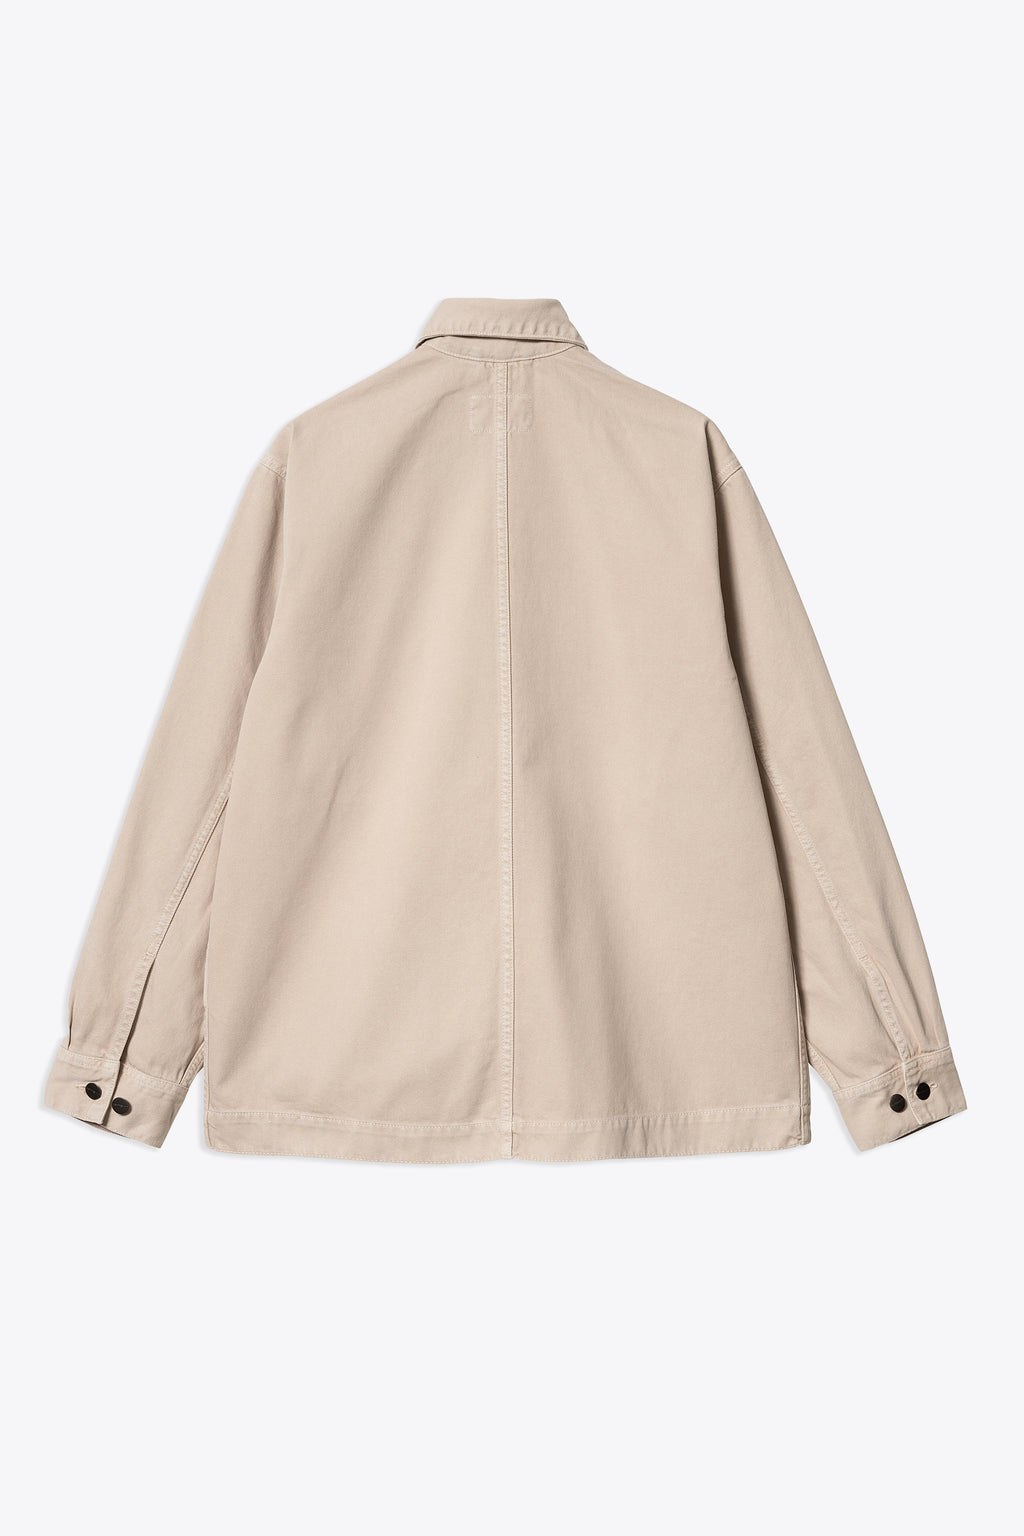 alt-image__Beige-cotton-twill-work-jacket-with-patch-pockets---Garrison-Coat